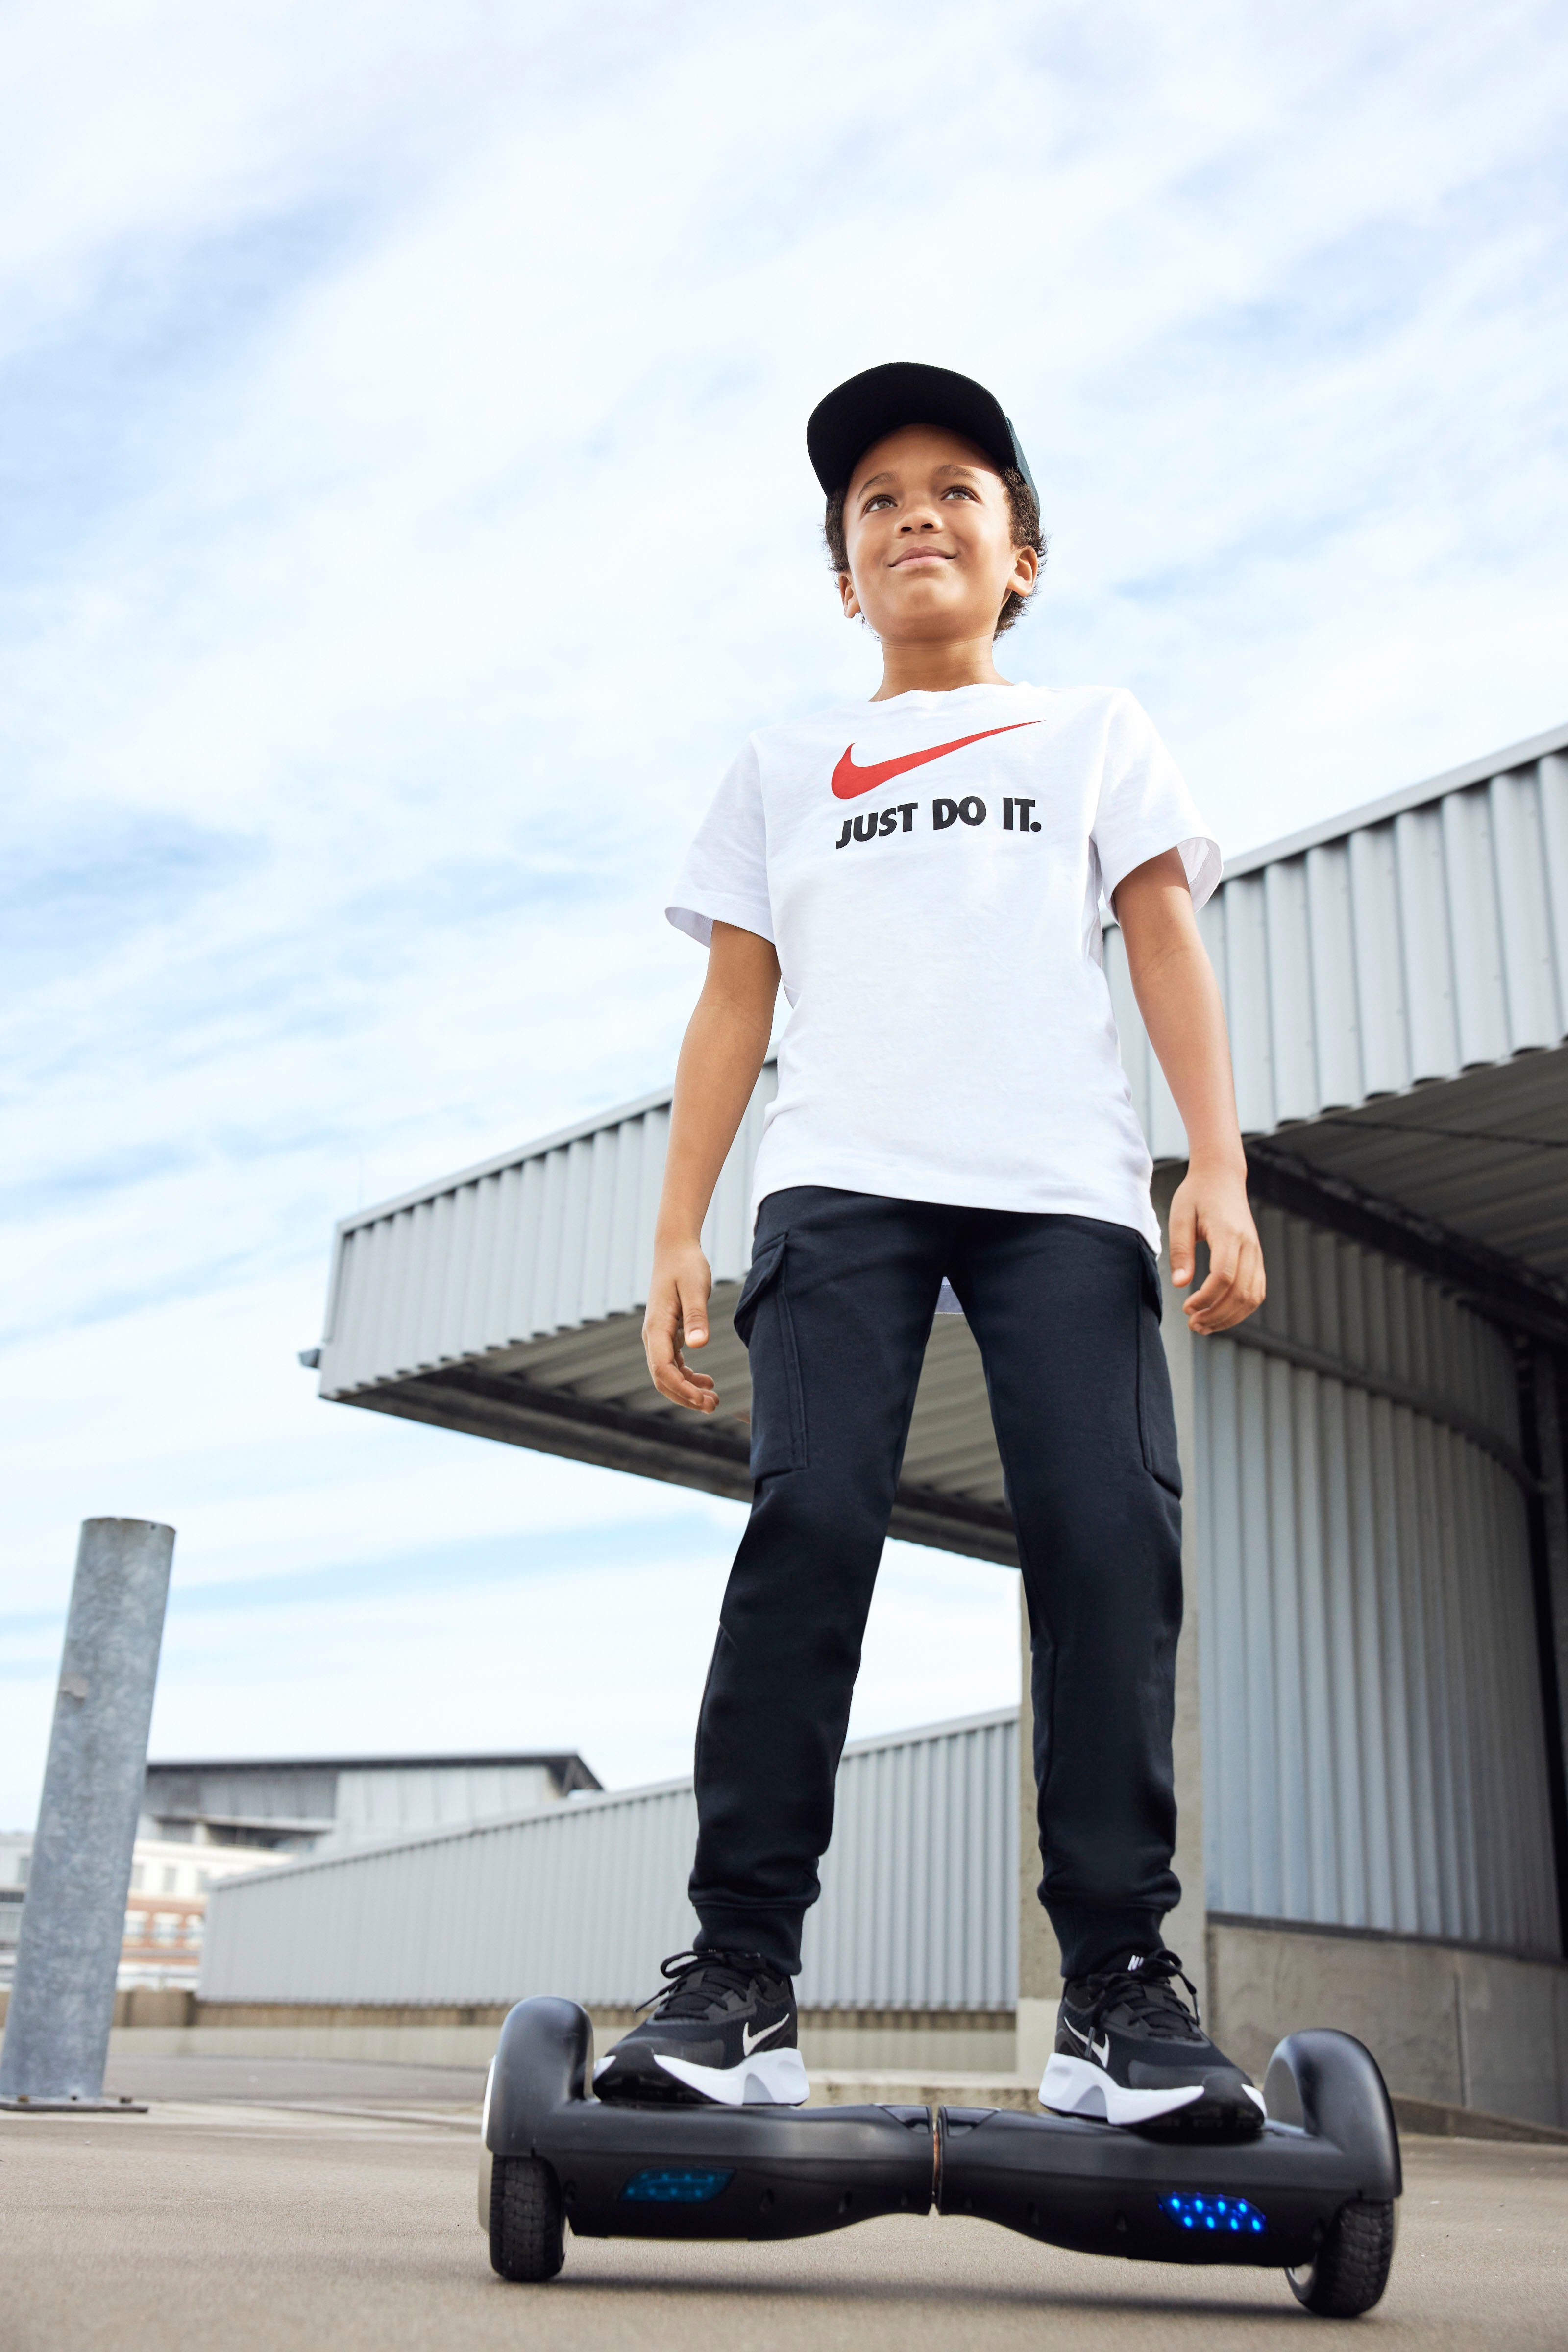 Nike Kids' Pants Jogginghose Big Sportswear Cargo schwarz (Boys) Club